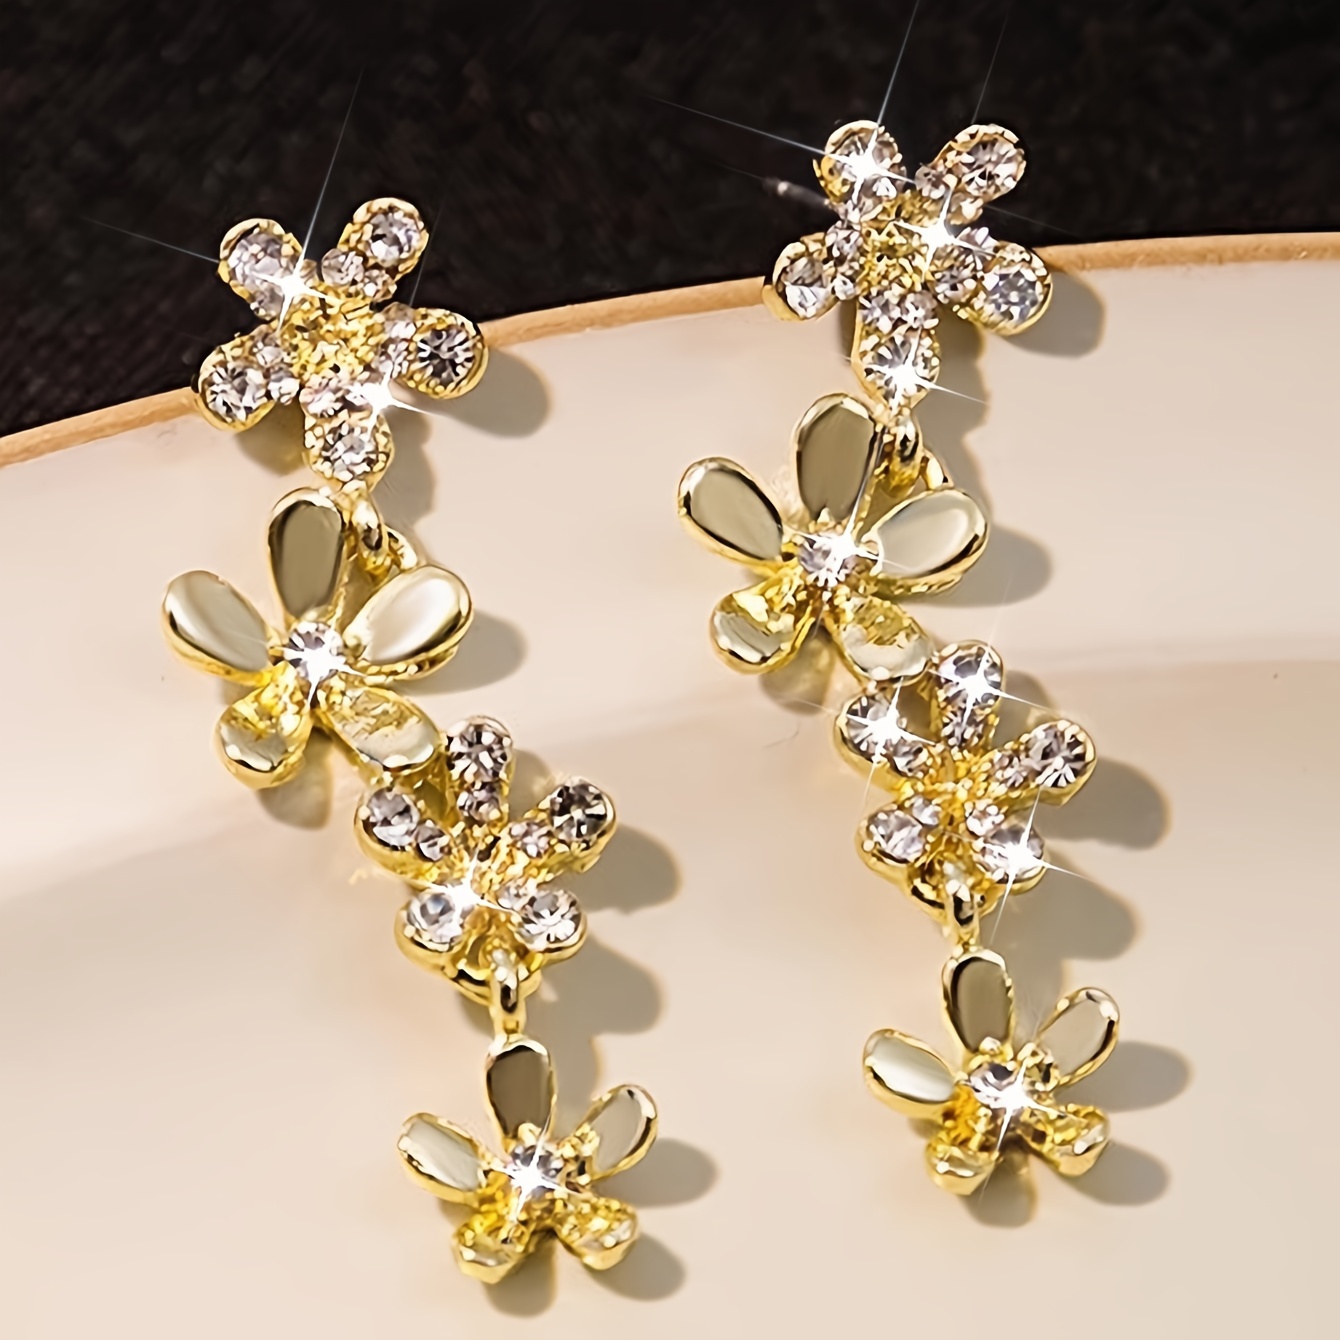 

Exquisite Golden Flower Design Shiny Rhinestone Inlaid Dangle Earrings Elegant Simple Style Delicate Female Gift